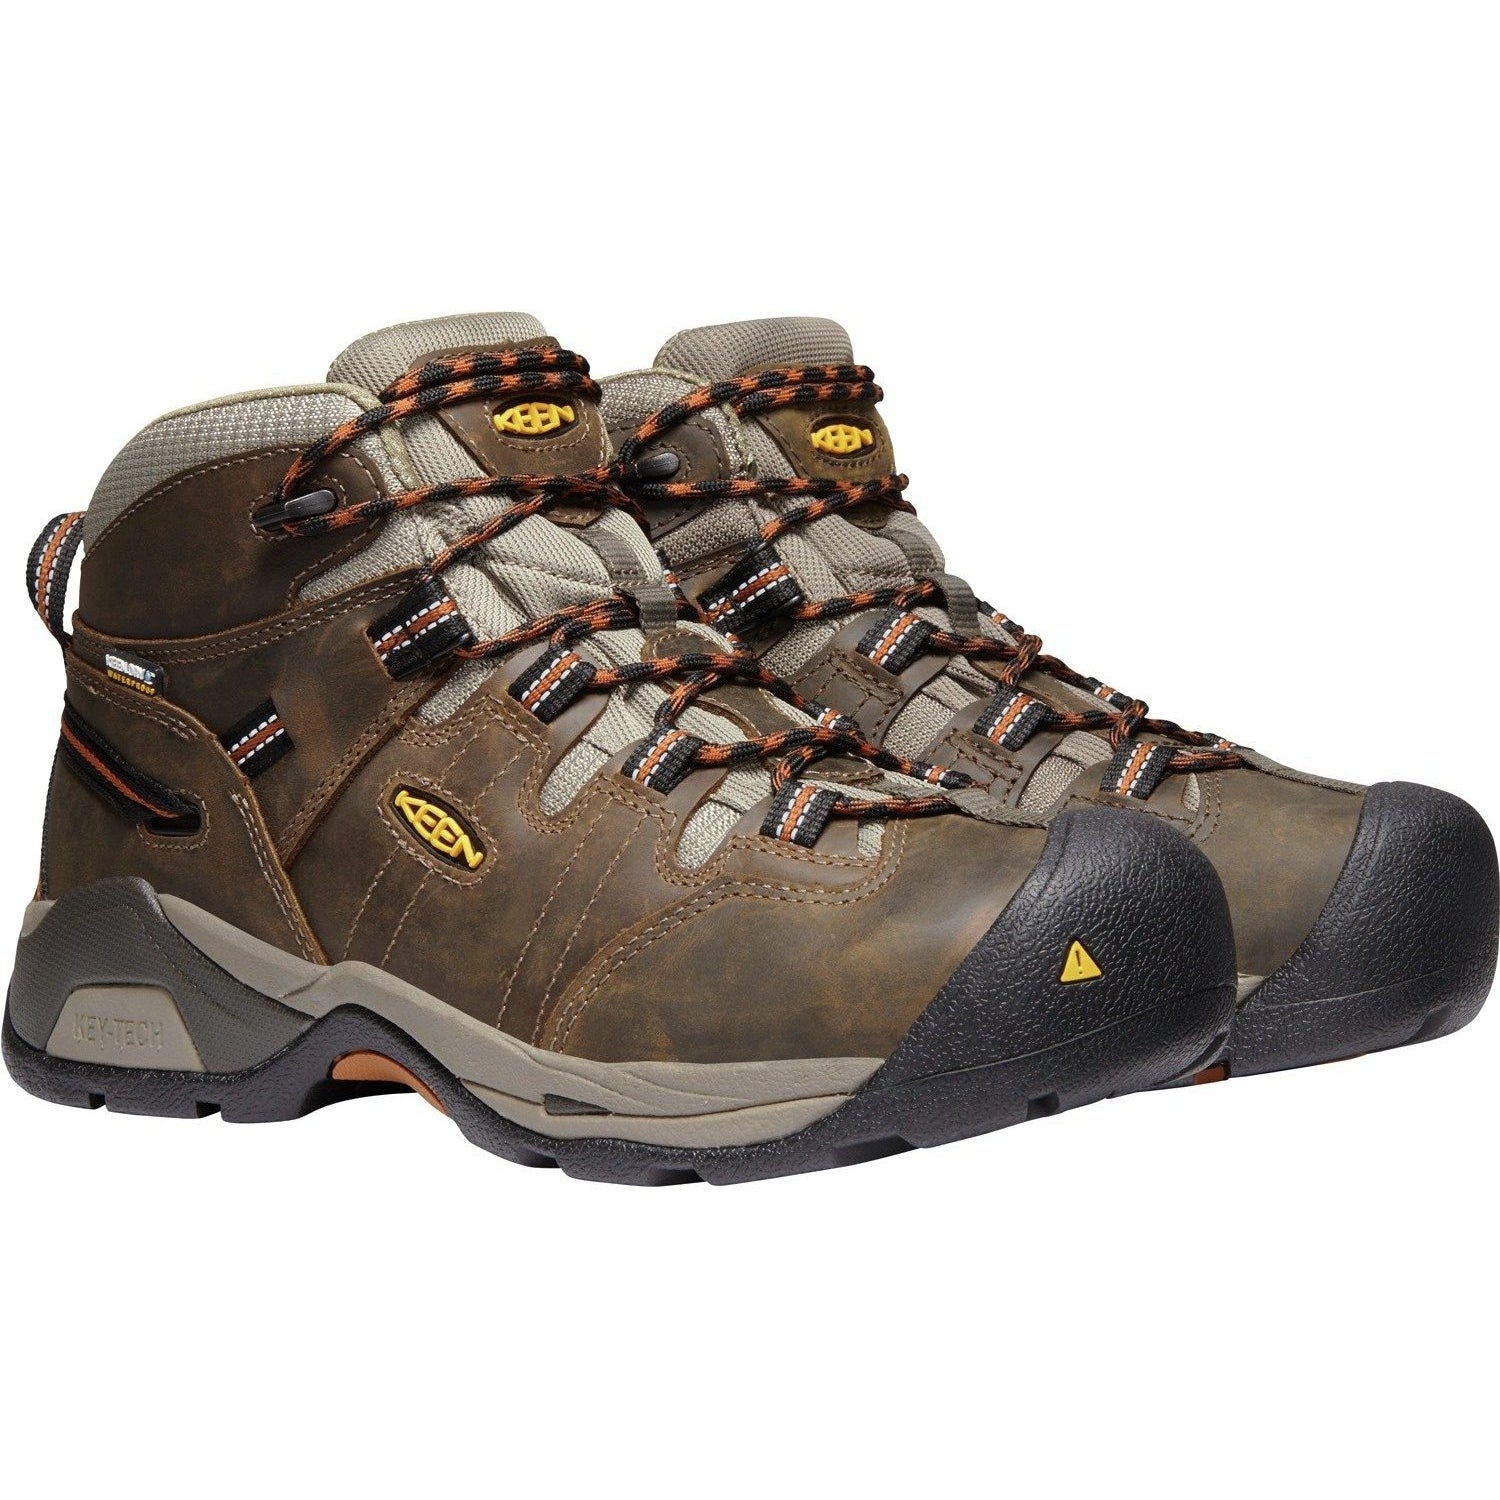 Keen Utility Men's Detroit XT WP Soft Toe Work Boot - Brown - 1020039 8 / Medium / Brown - Overlook Boots